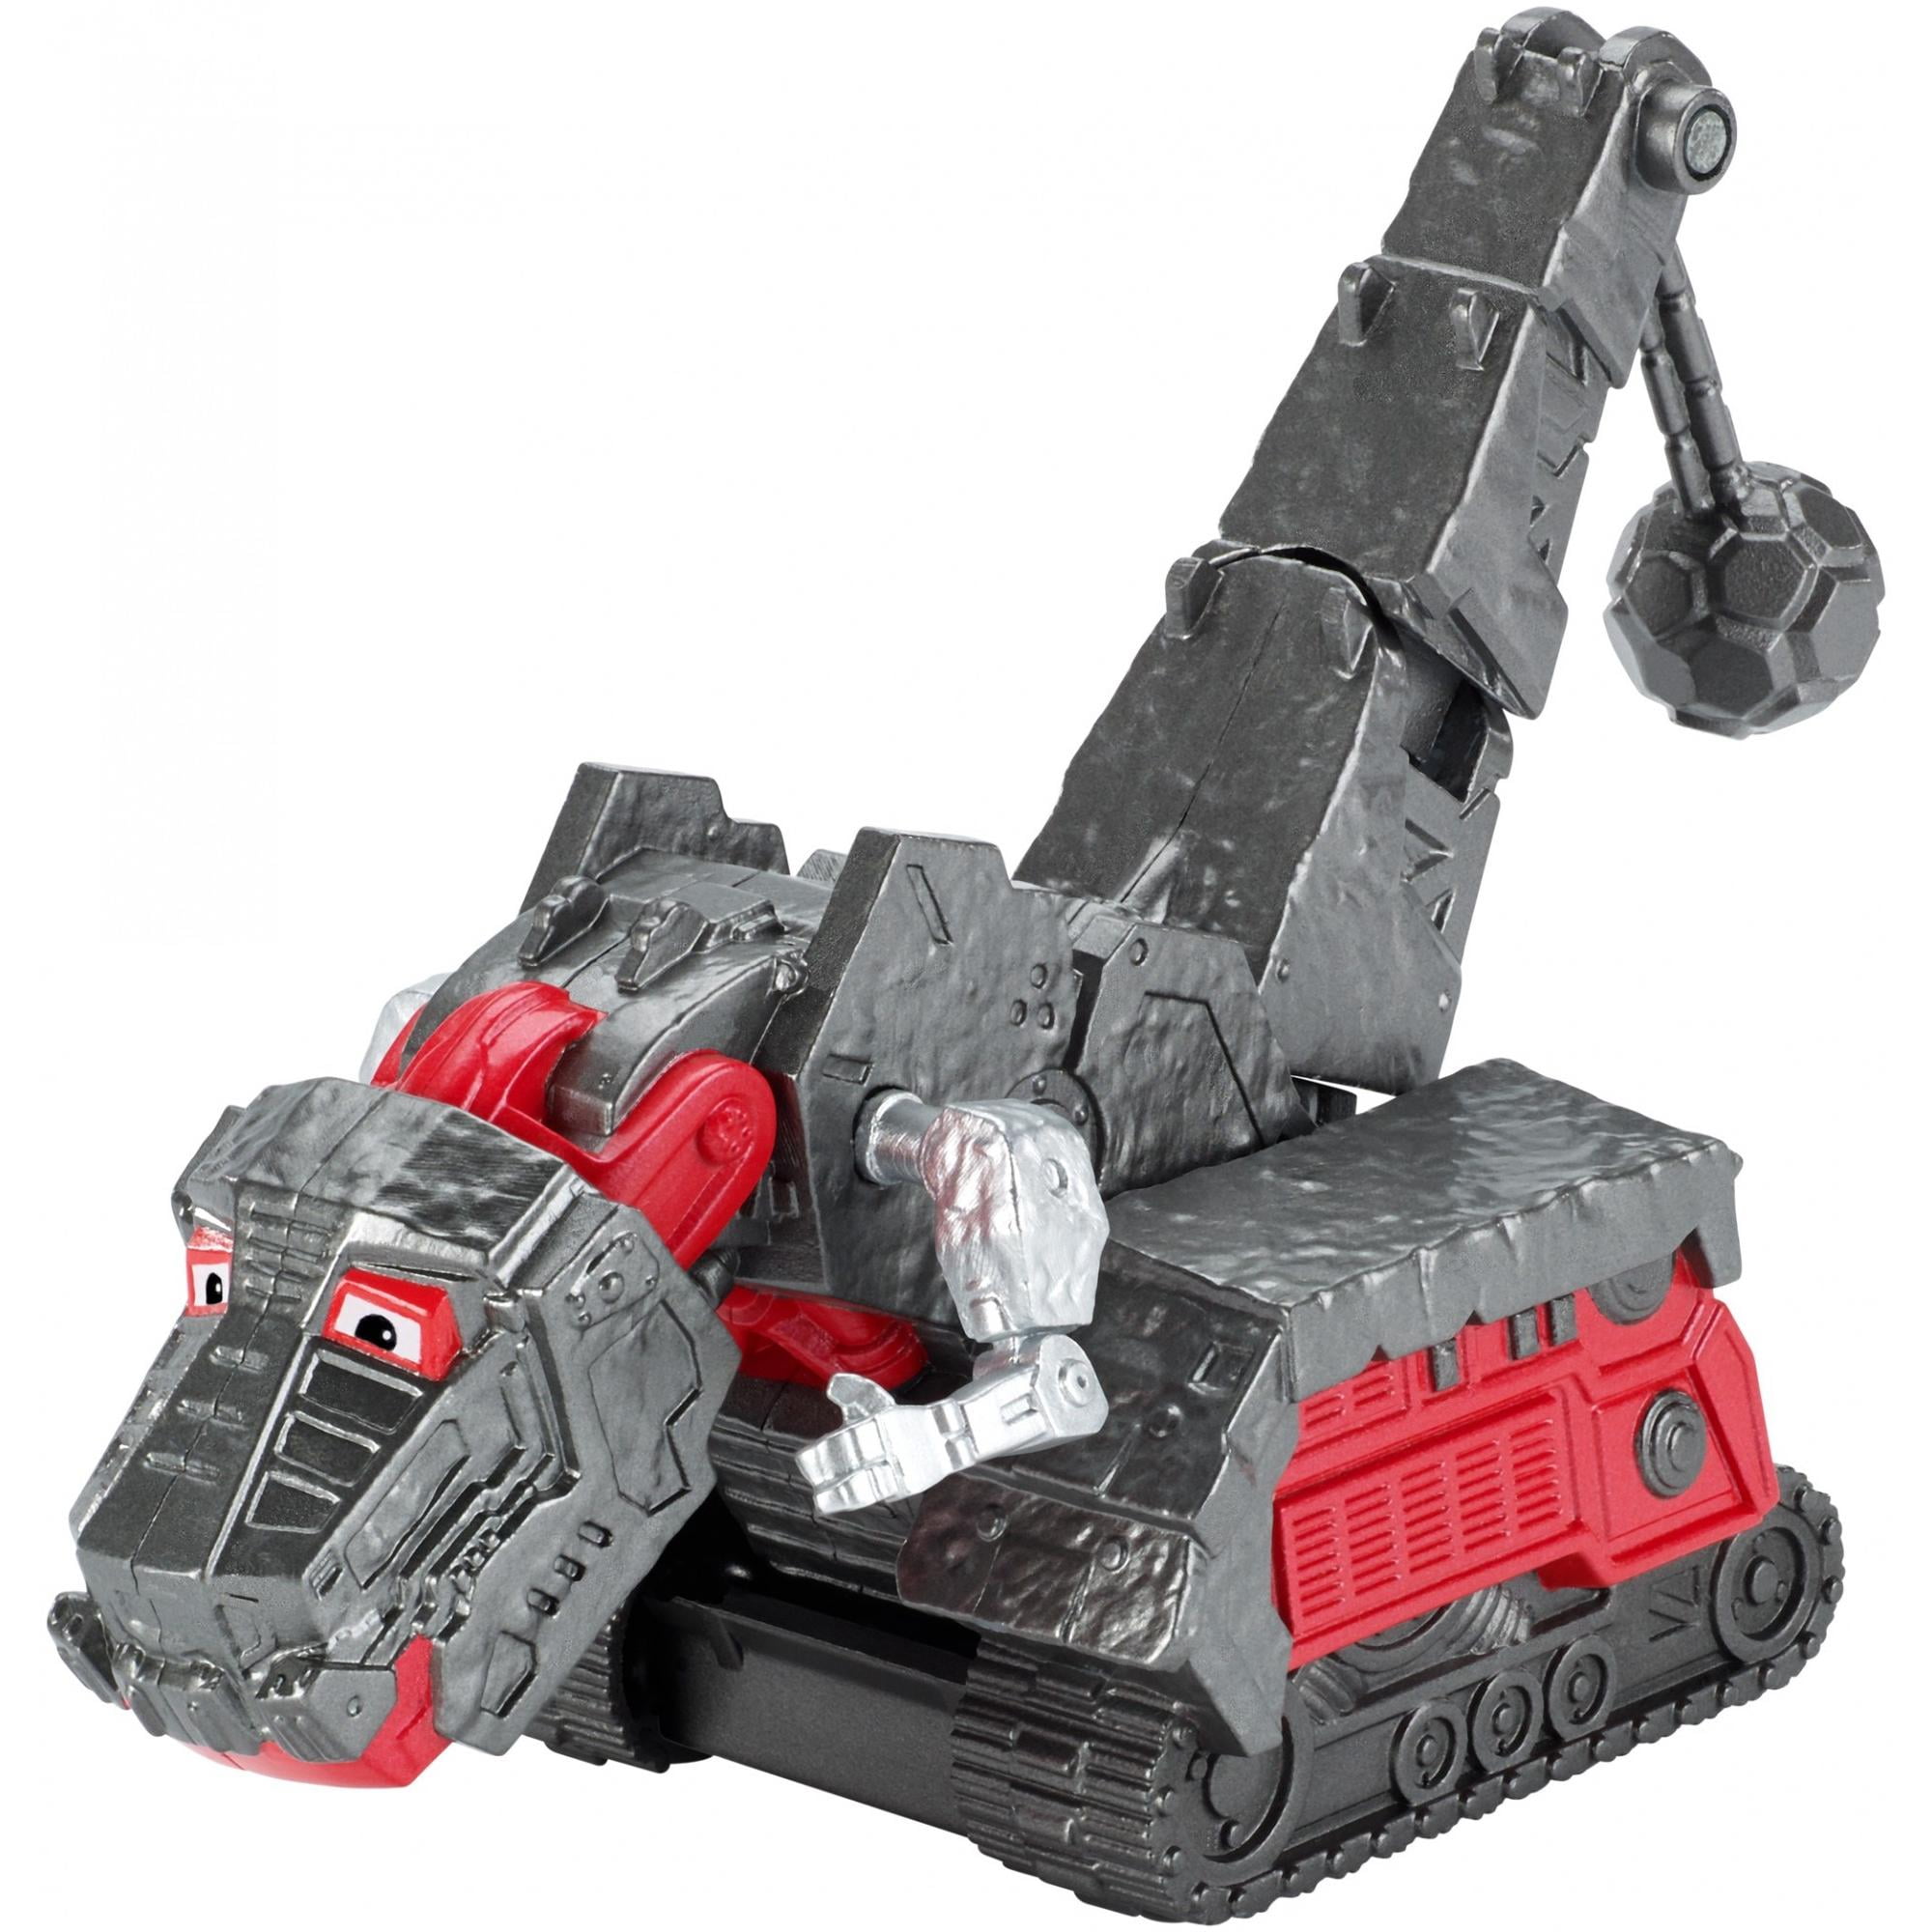 Mattel Dinotrux Die-Cast Armored TY Vehicle DTV62